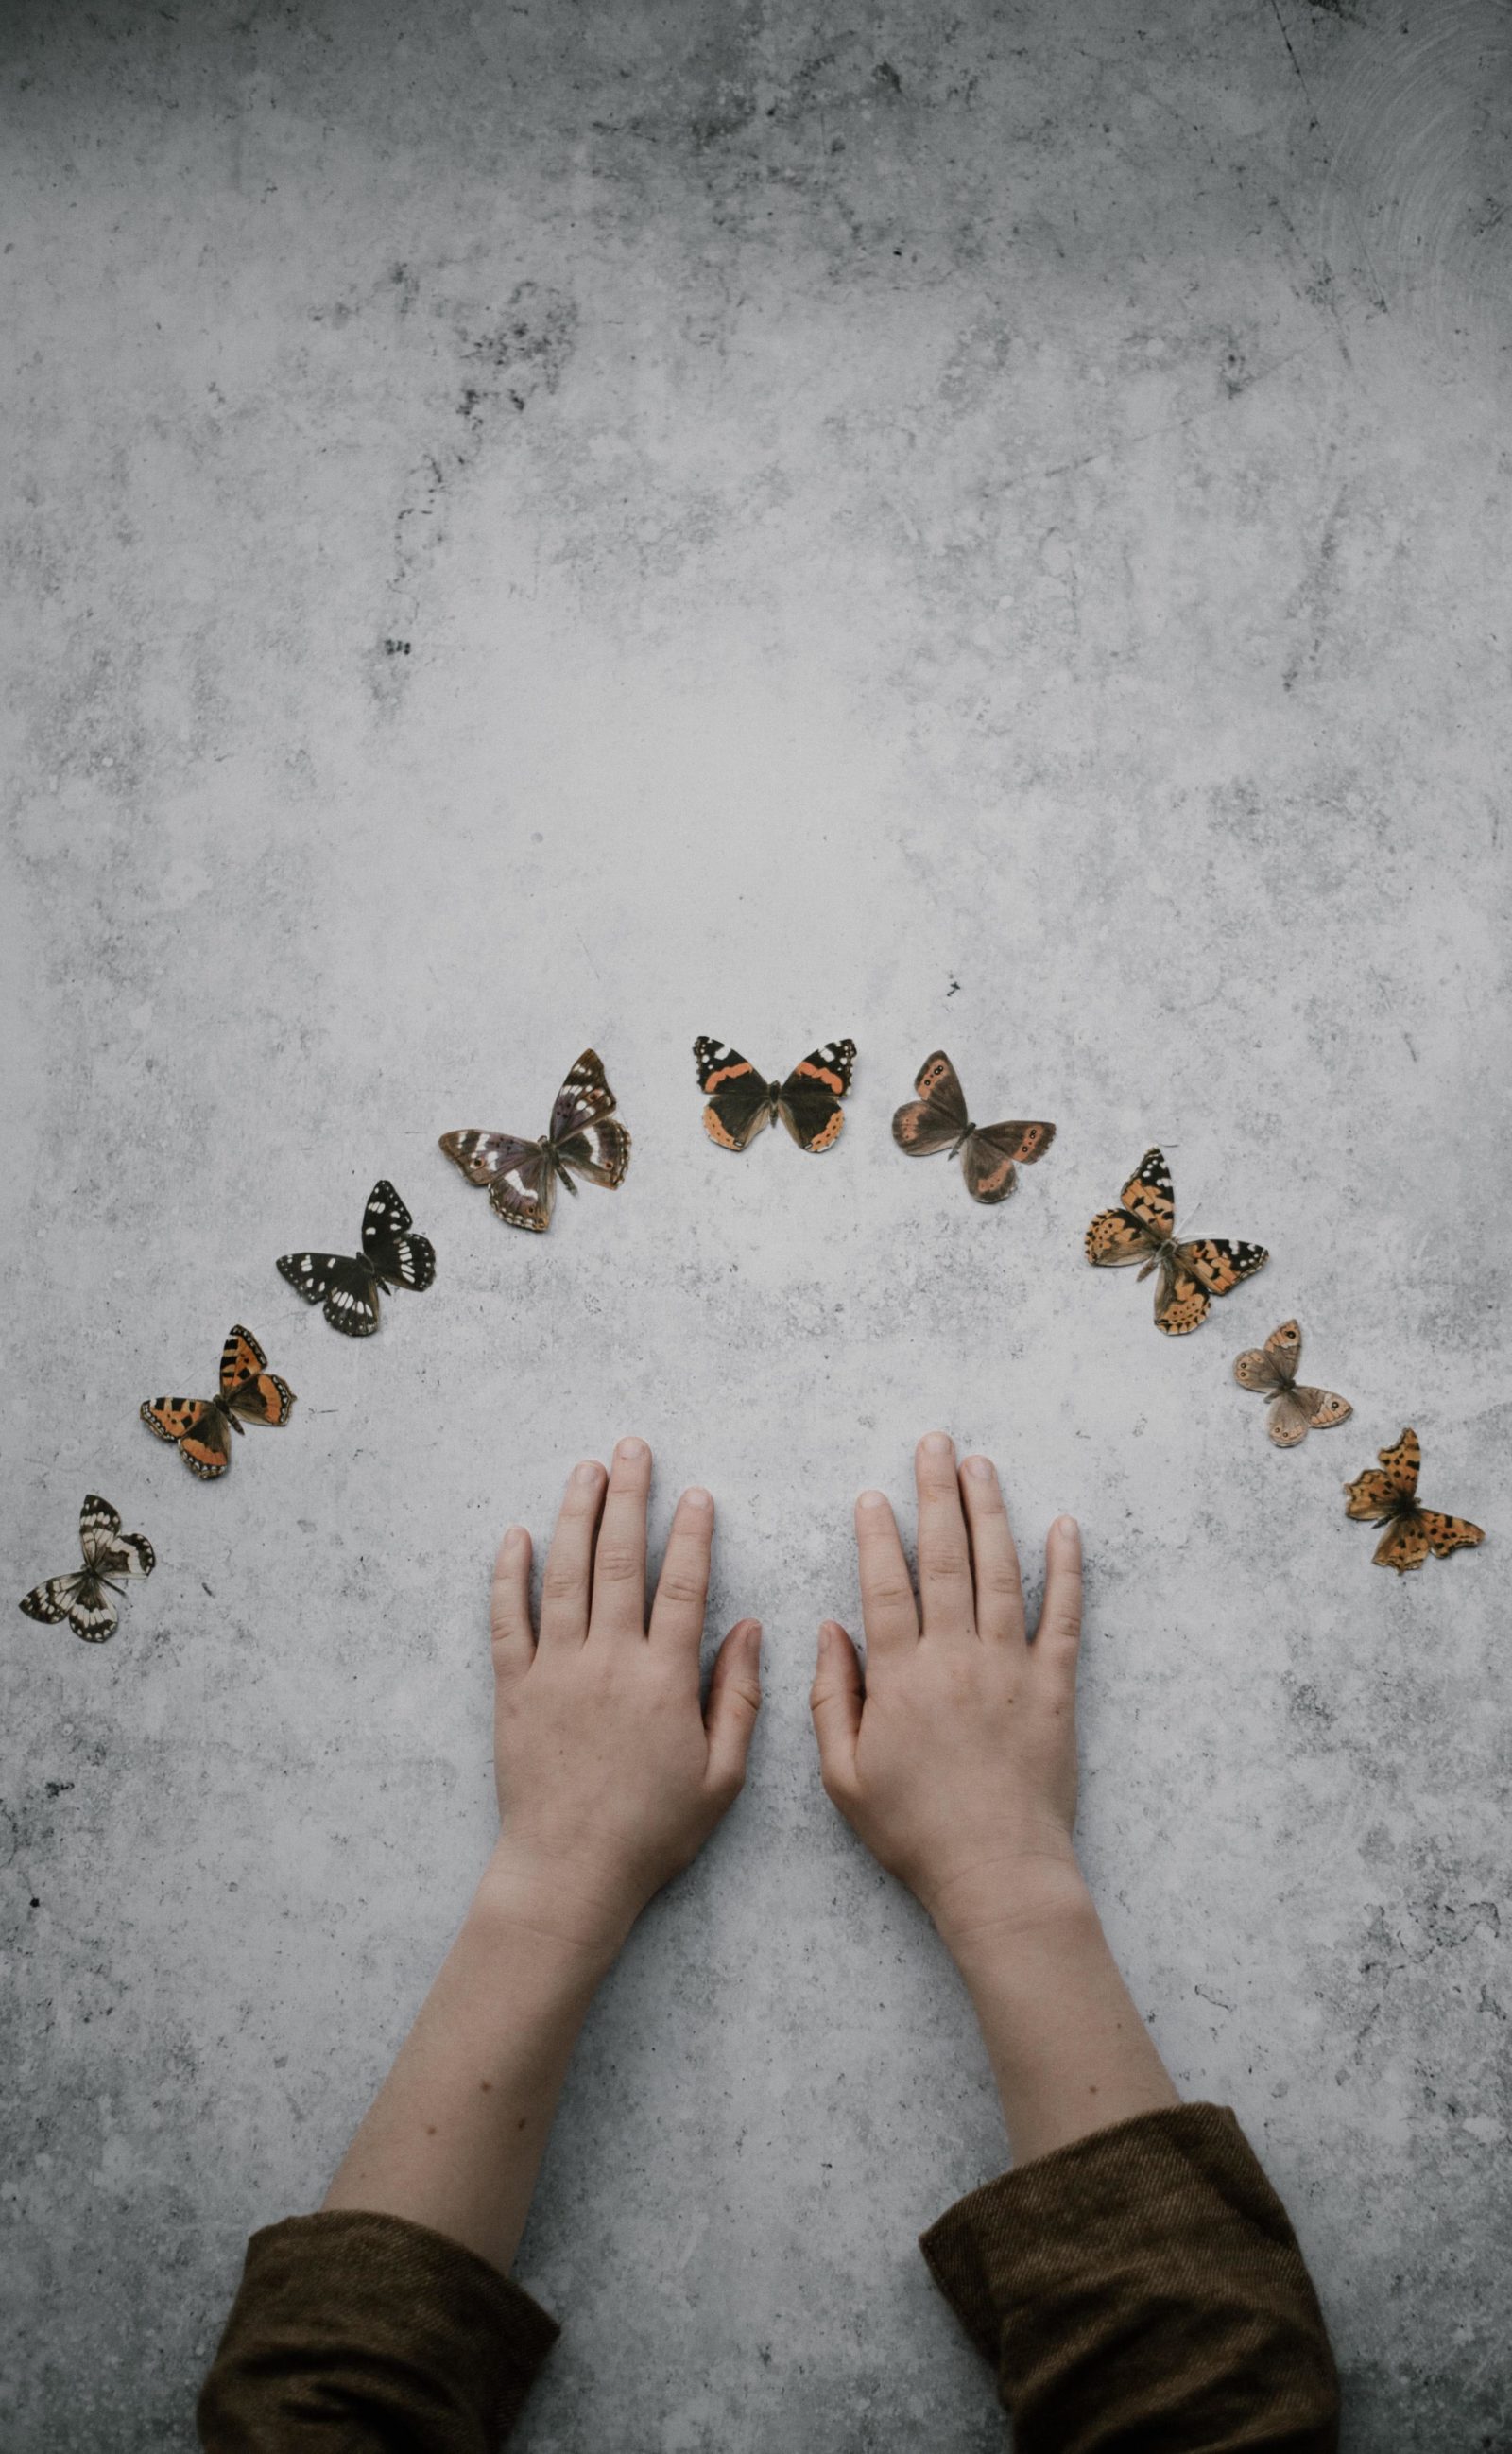 Butterflies around on hands